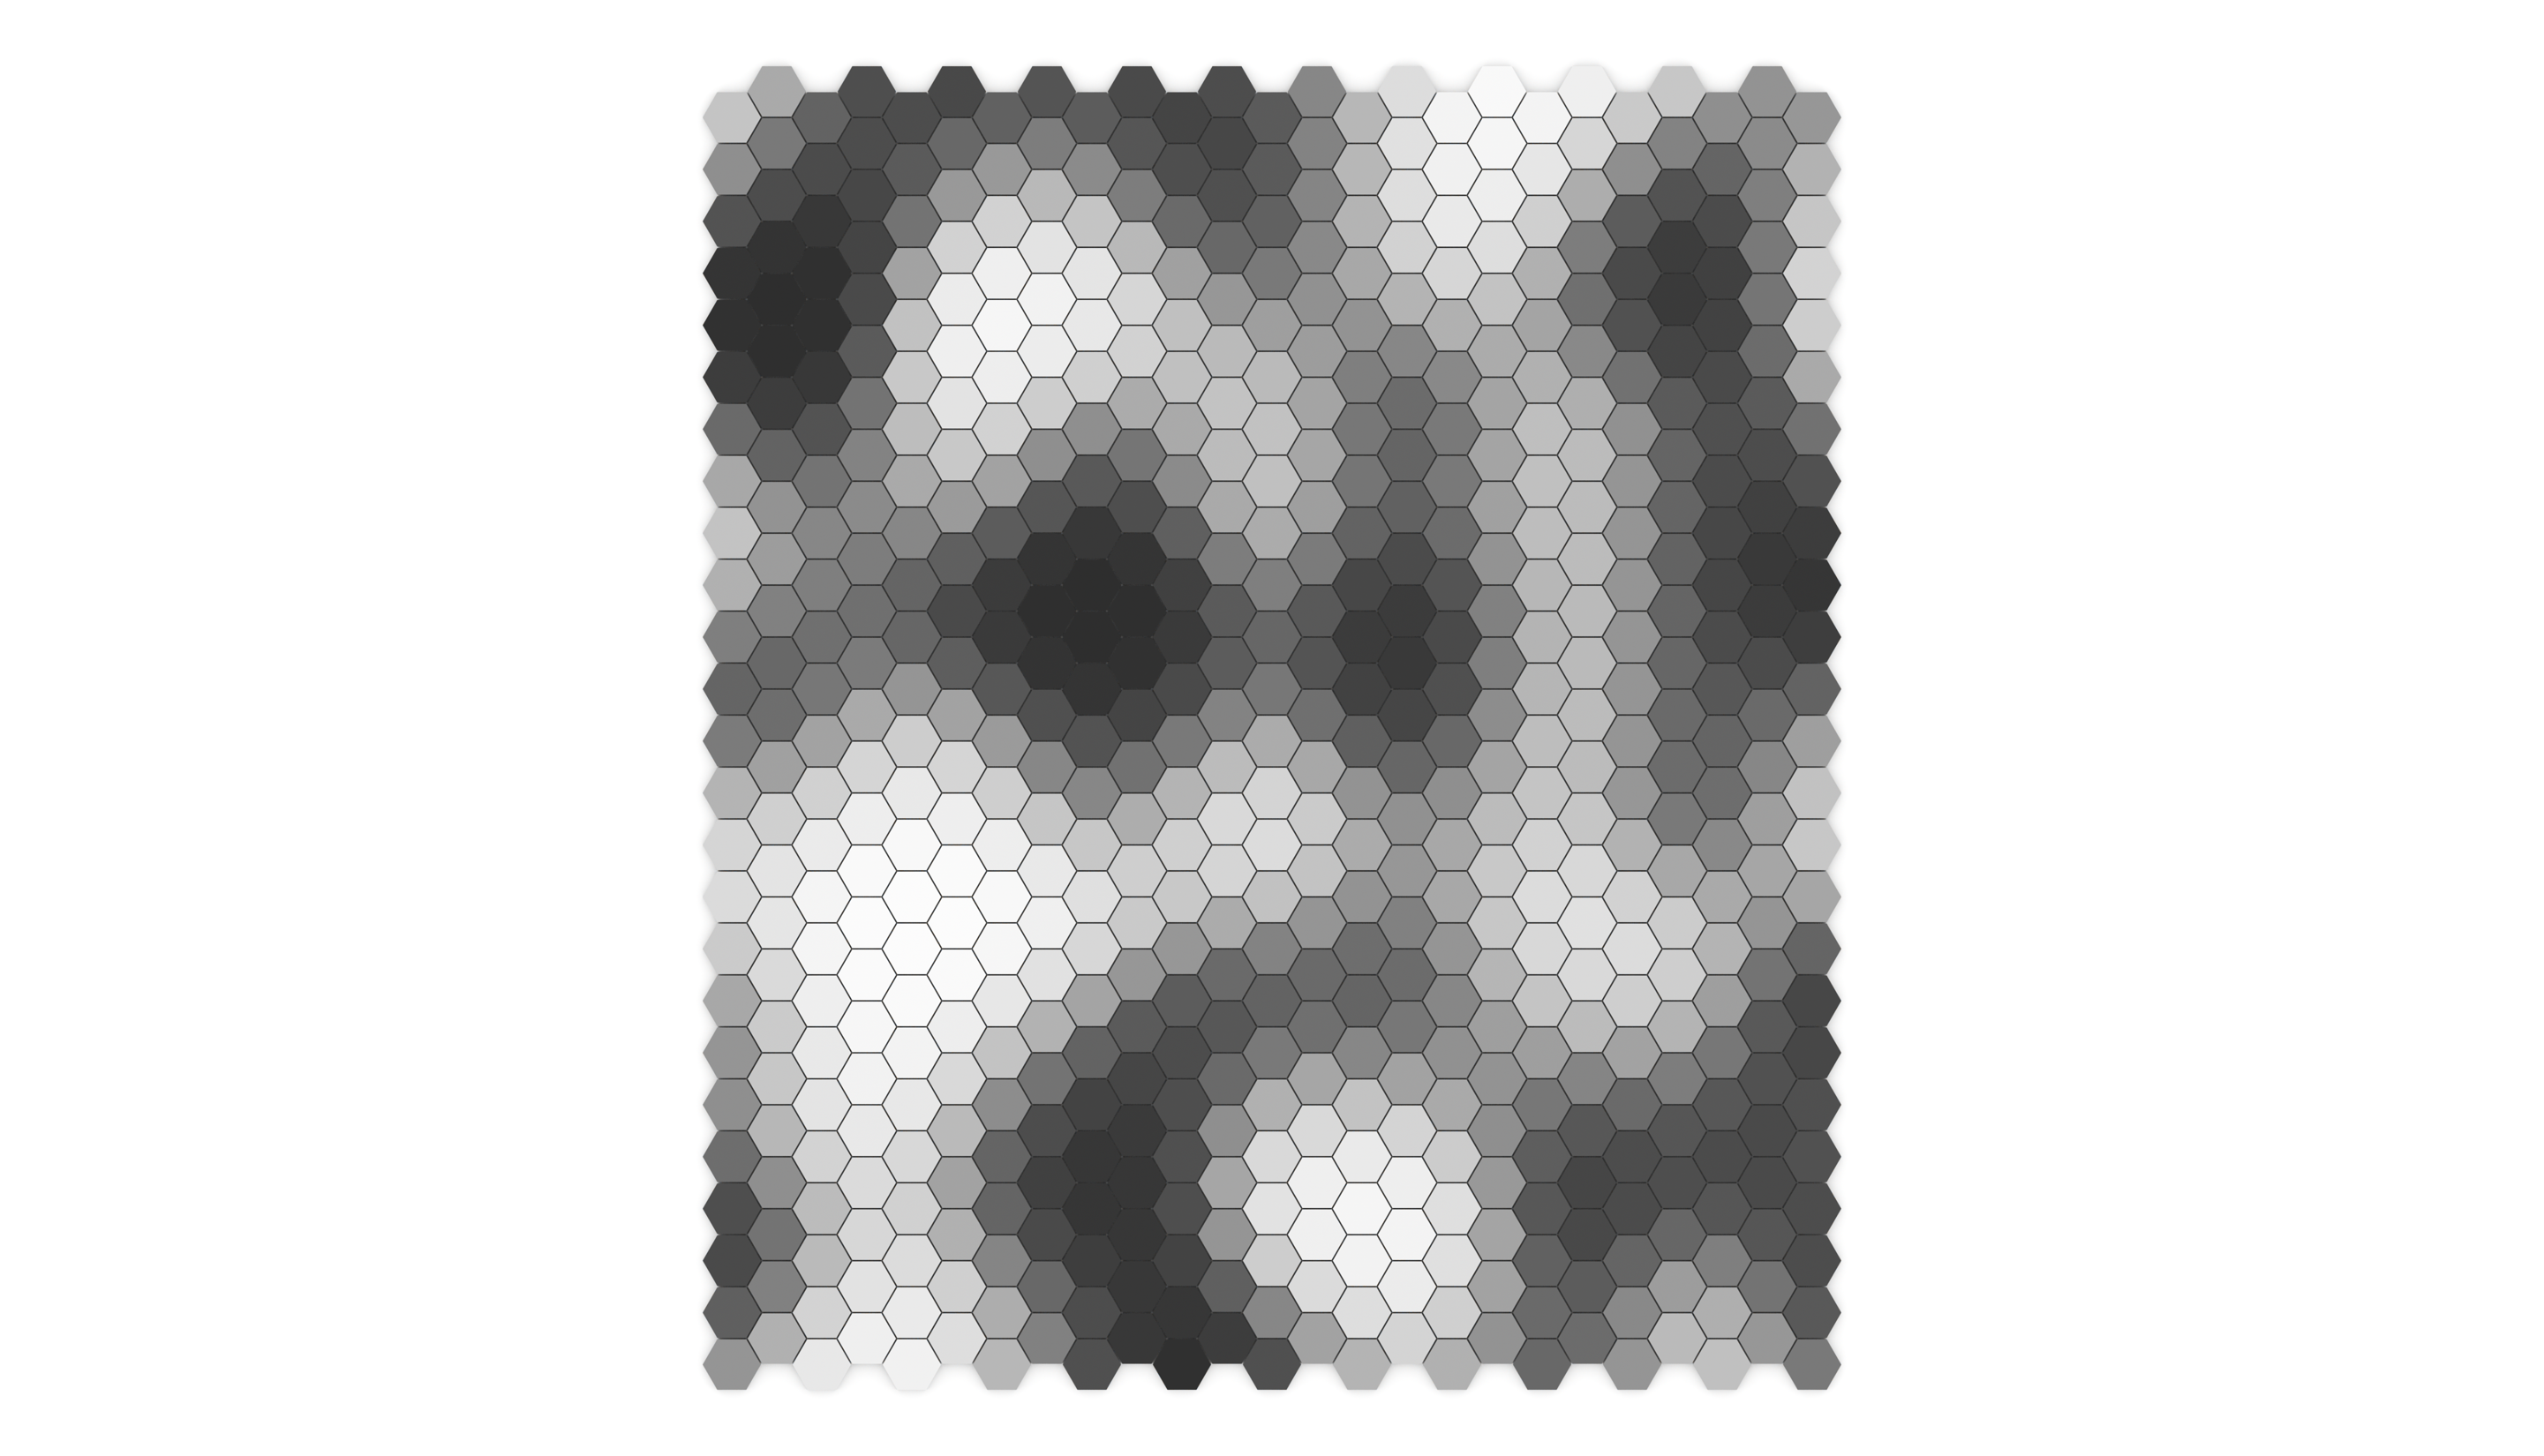 Hexagonal paving pattern from noise